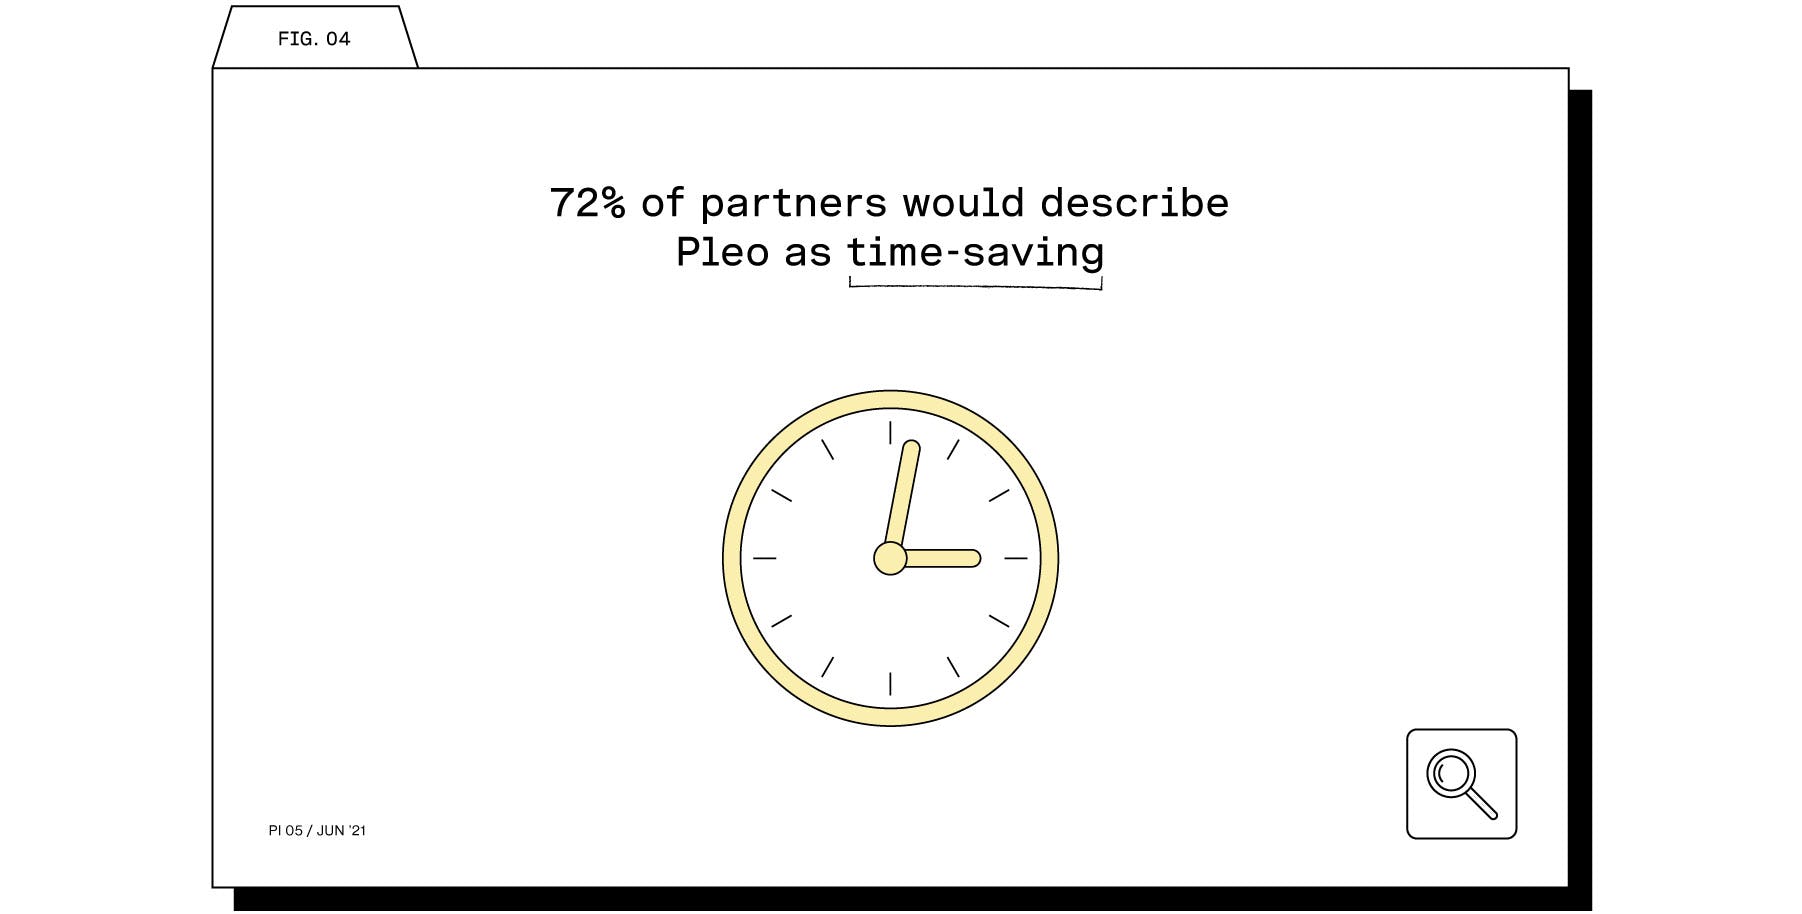 partnerships-survey-time-saving 